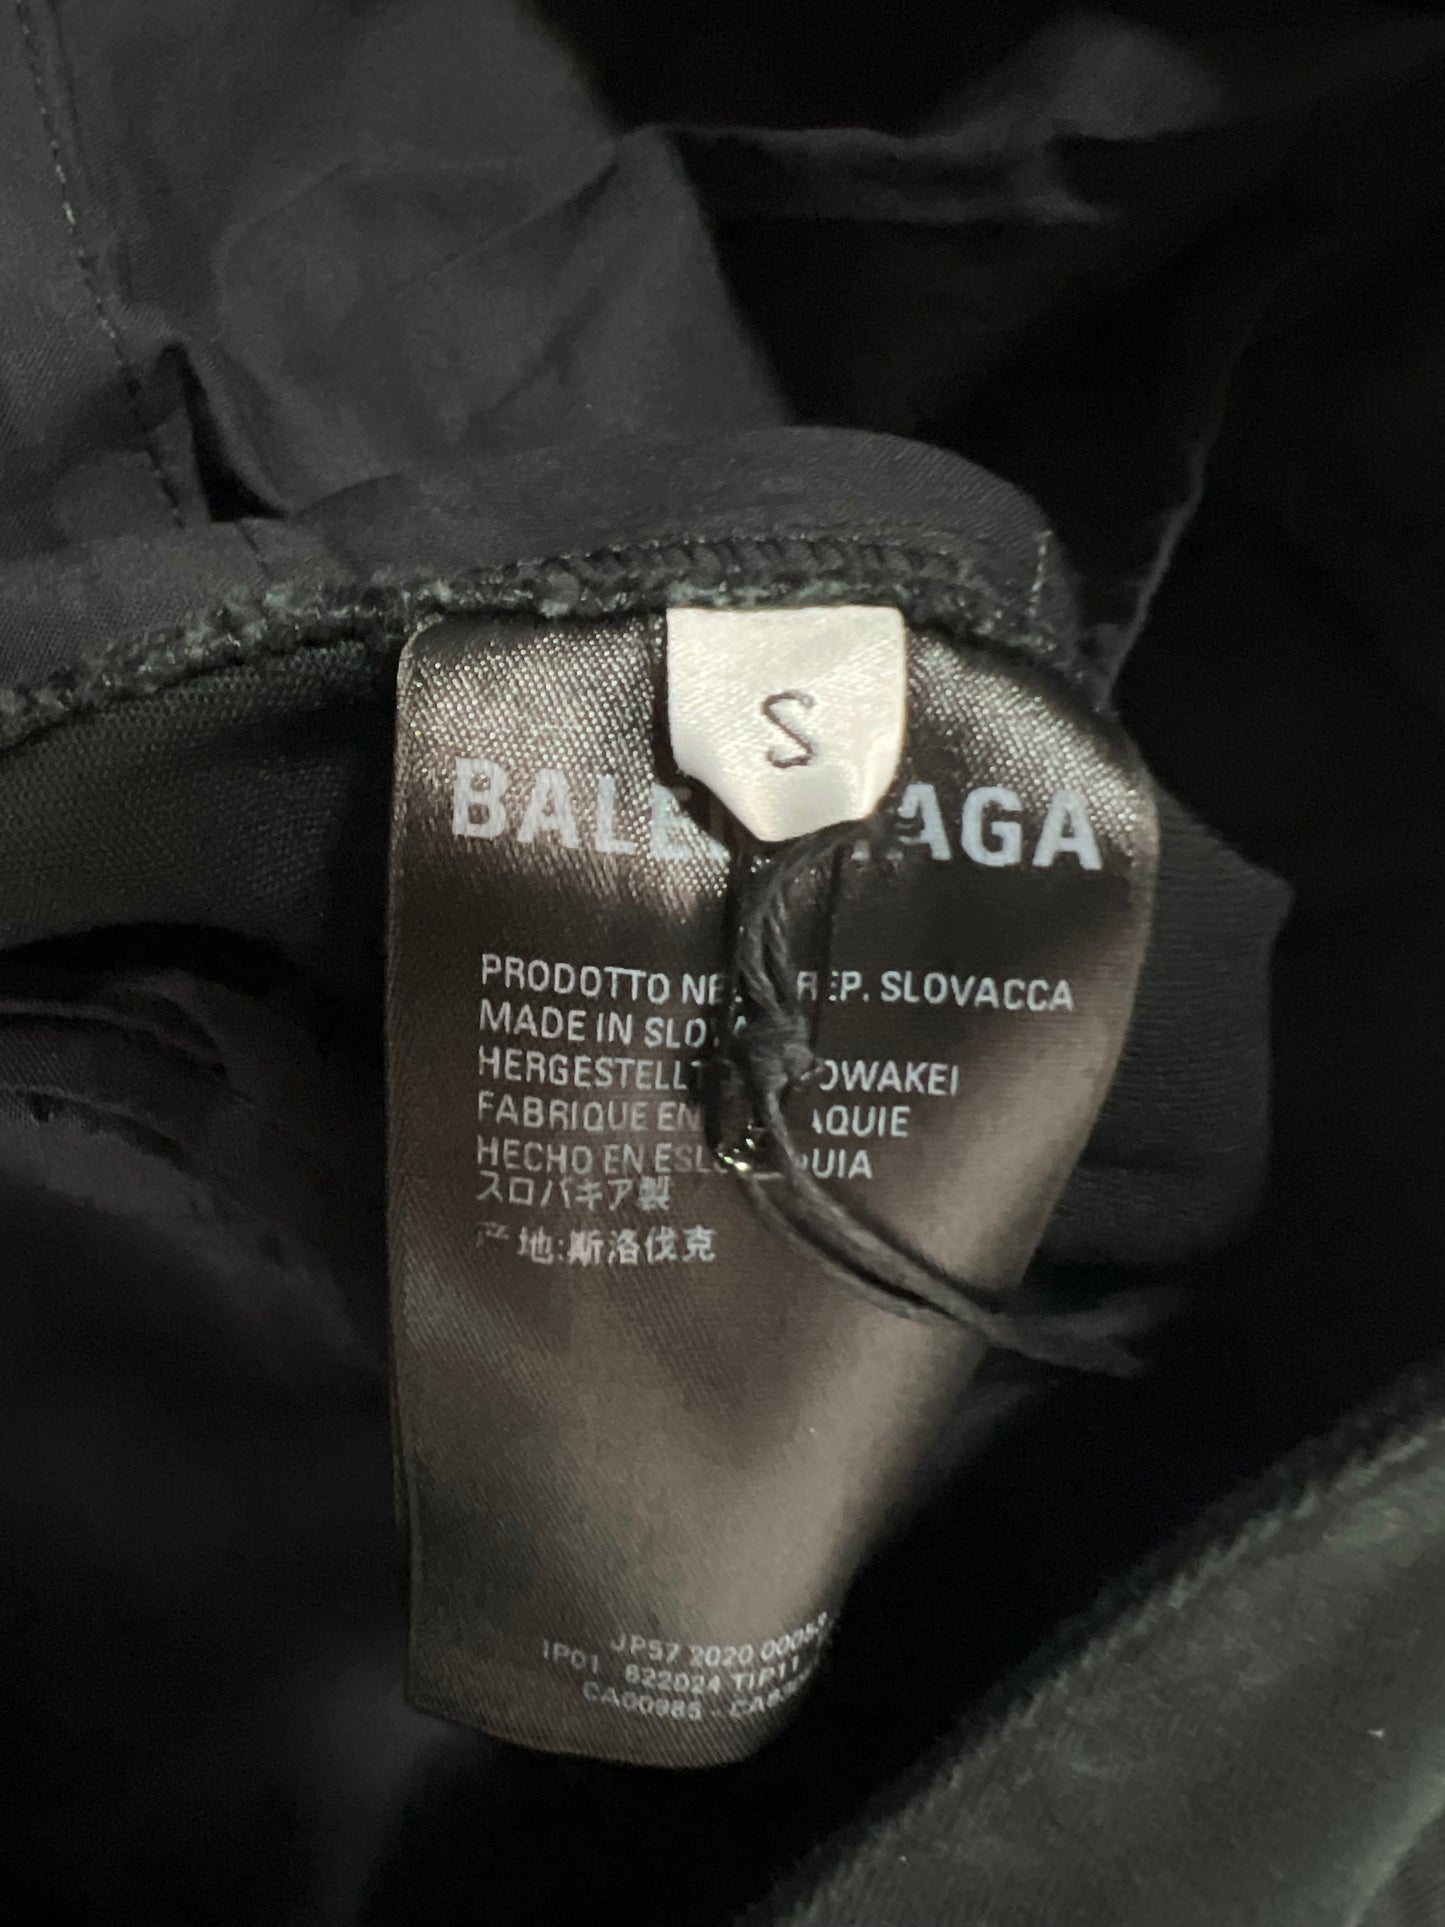 Balenciaga SS20 „Donda“ Cargo Pants in black SZ:XS|S